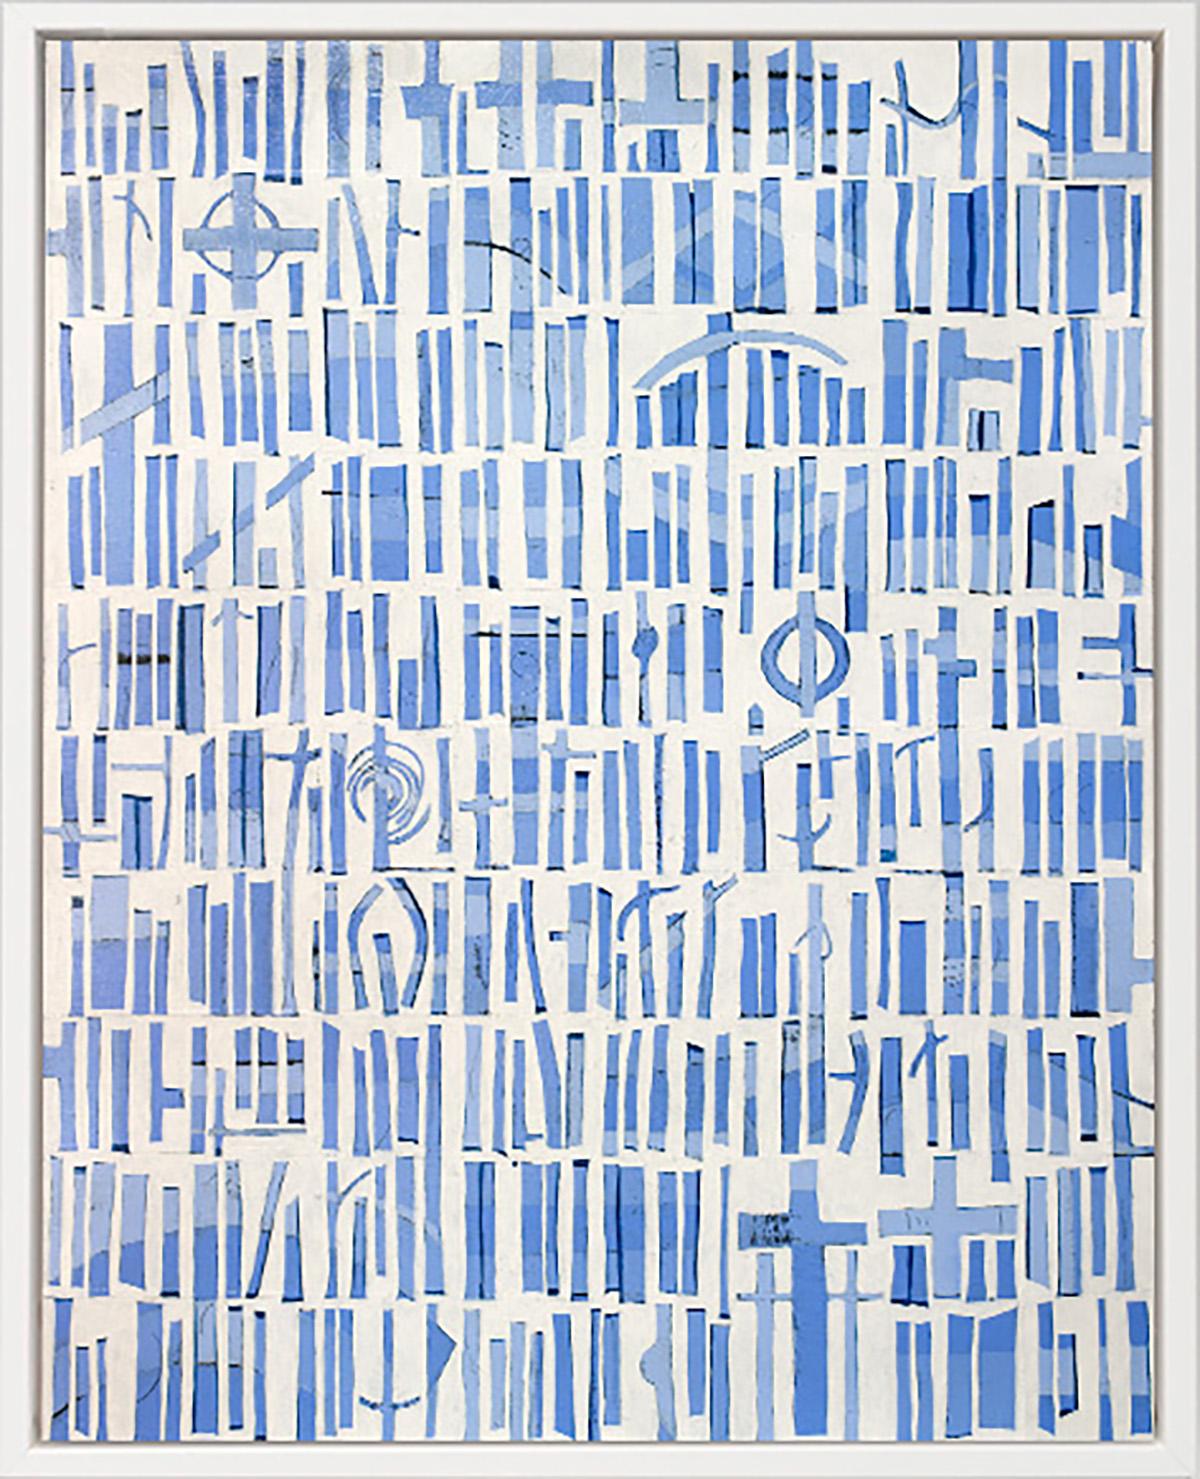 Abstract Print Sofie Swann - « A Summer Day in Nantucket » - Impression giclée en édition limitée, 127 x 101,6 cm